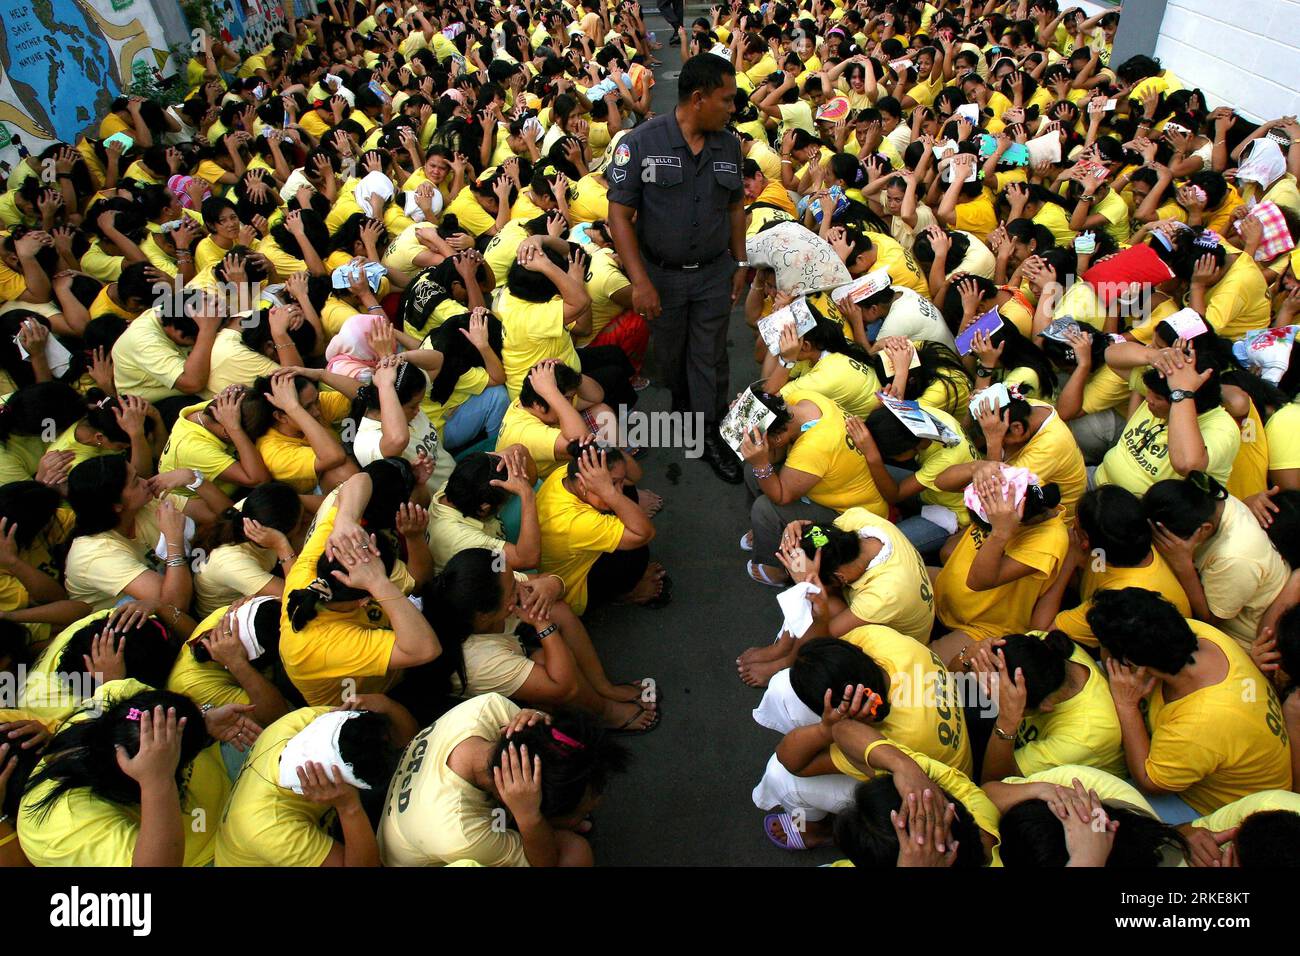 Bildnummer: 55127472  Datum: 29.03.2011  Copyright: imago/Xinhua (110329) -- MANILA, March 29, 2011 (Xinhua) -- A jail officer observes female inmates ducking and covering their heads during an earthquake drill inside the Female Detention Center in Quezon City, north of Manila, the Philippines, March 29, 2011. (Xinhua/Rouelle Umali) (ybg) PHILIPPINES-MANILA-EARTHQUAKE-DRILL PUBLICATIONxNOTxINxCHN Gesellschaft Naturkatastrophe Erdbeben Übung Erdbebenübung kbdig xsk 2011 quer  o0 Katastrophenschutzübung, Totale    Bildnummer 55127472 Date 29 03 2011 Copyright Imago XINHUA  Manila March 29 2011 X Stock Photo